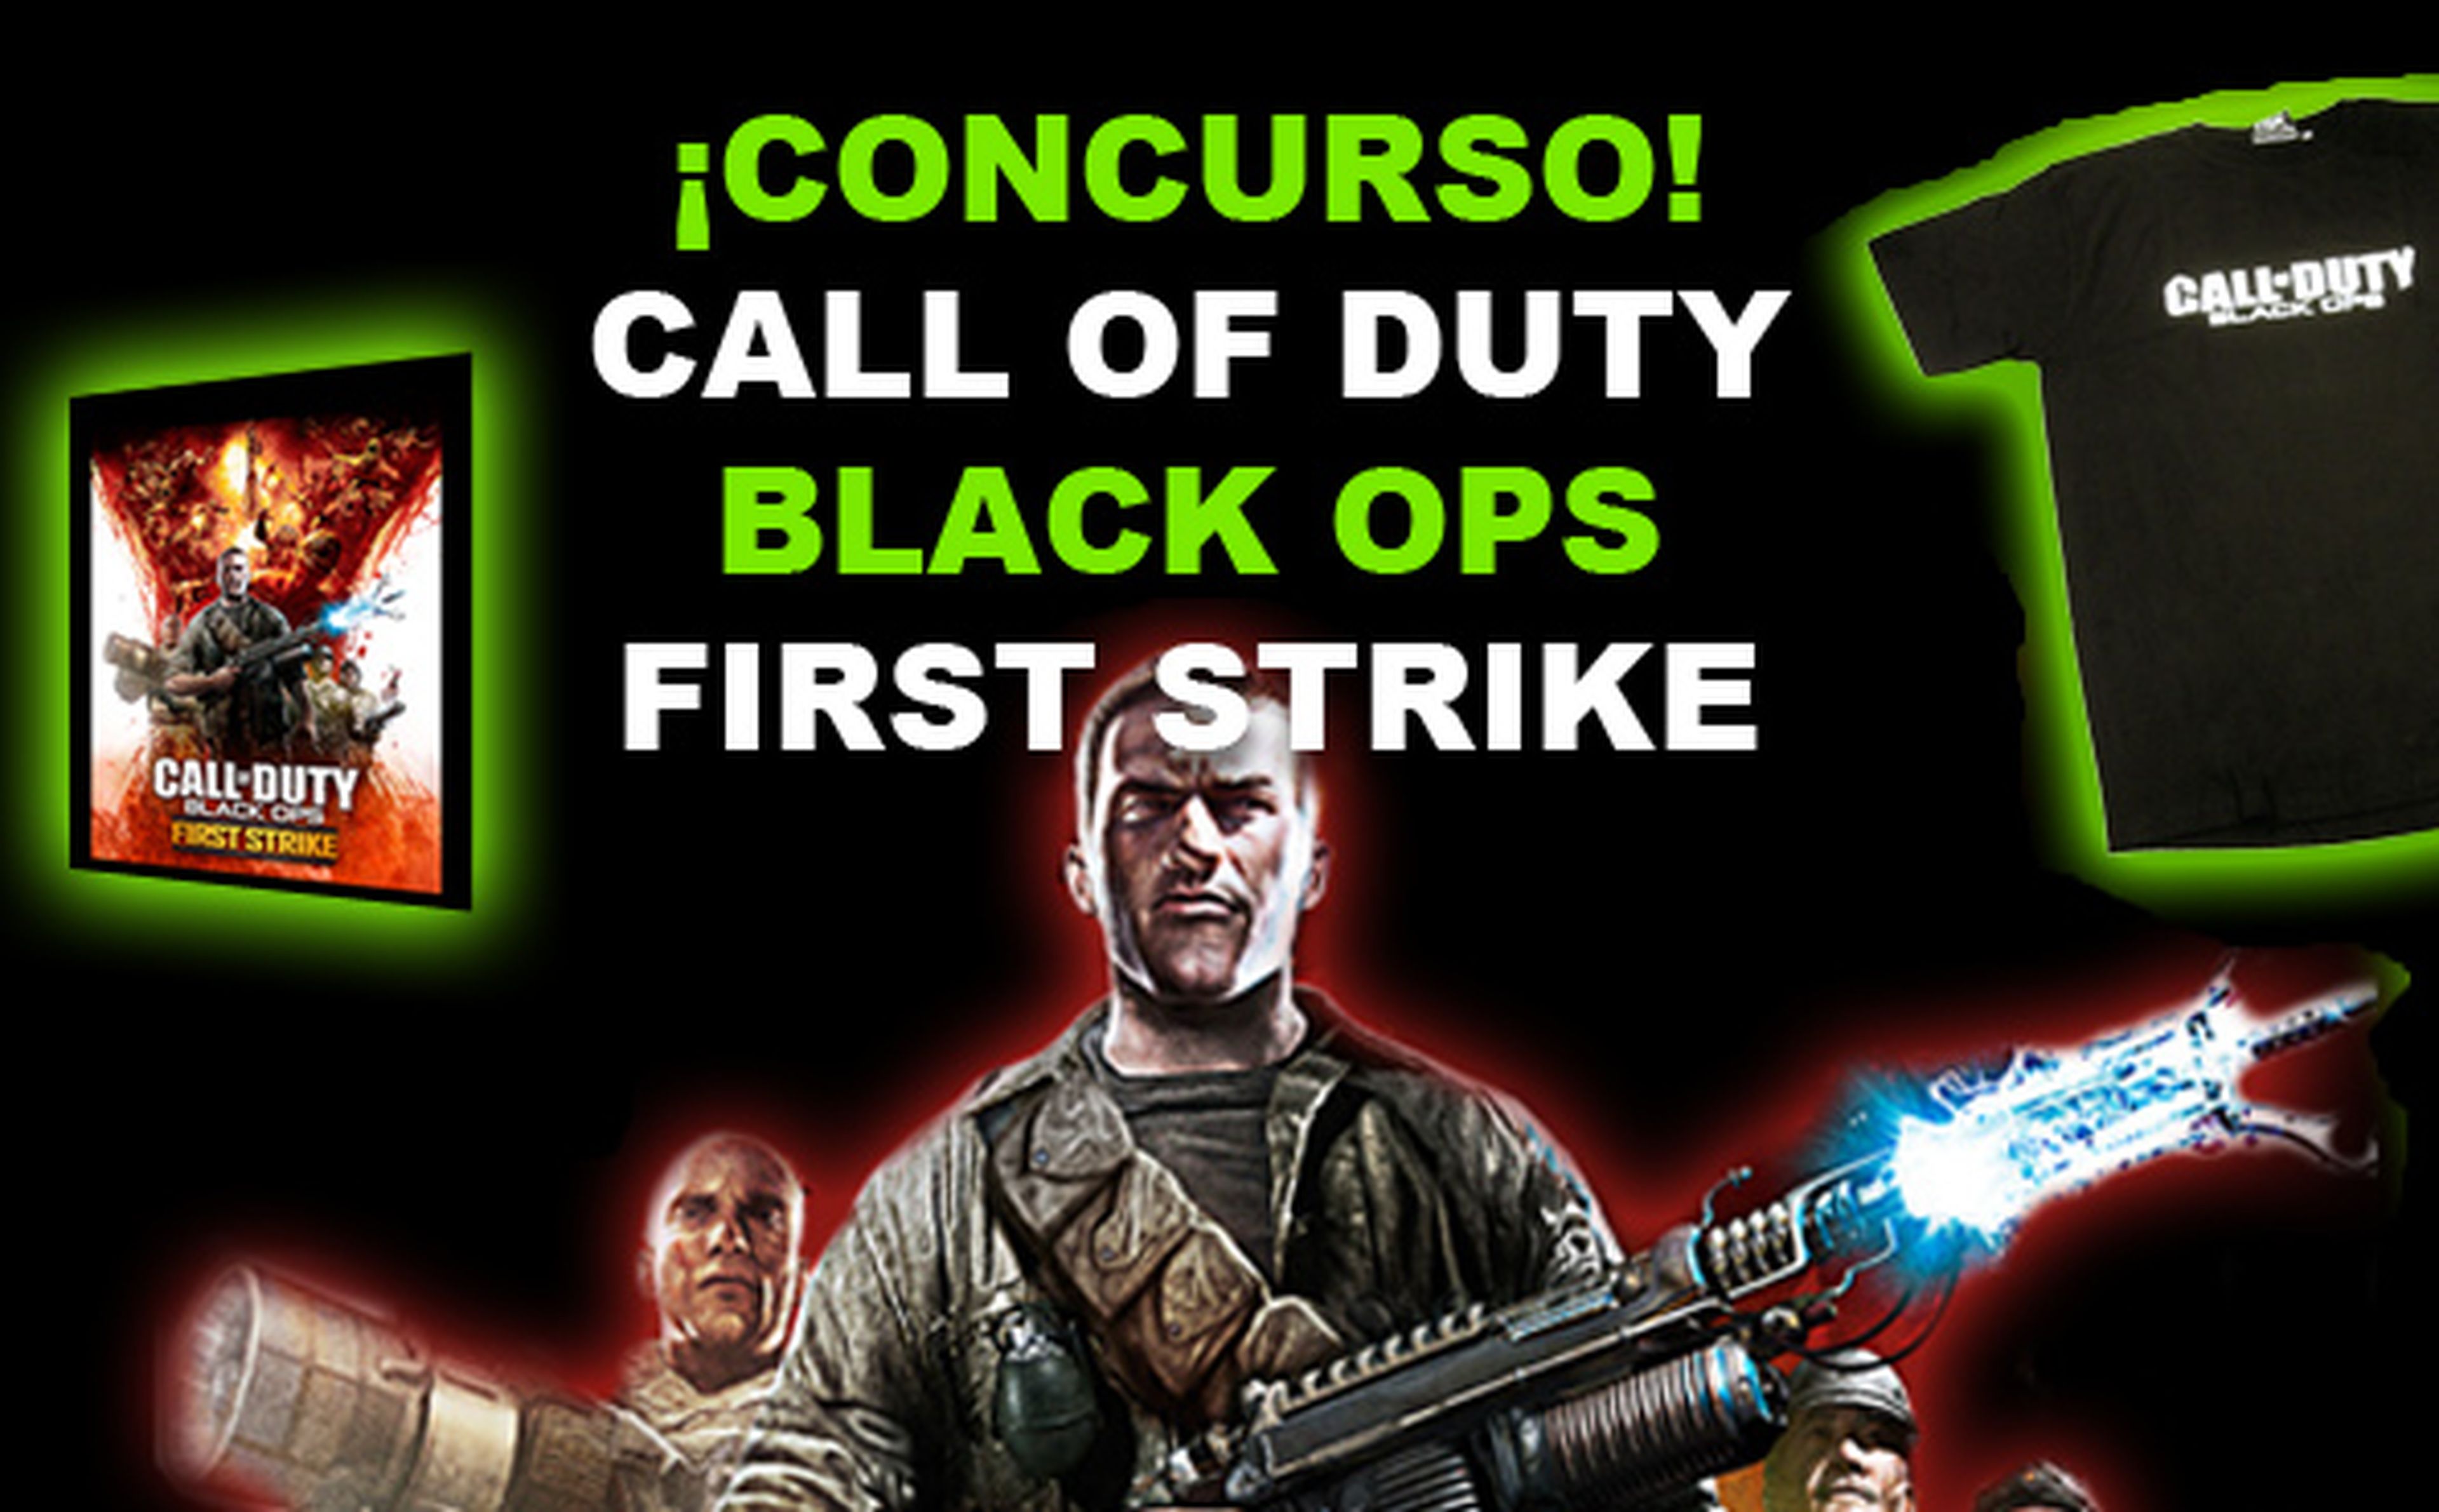 CONCURSO: Call of Duty Black Ops